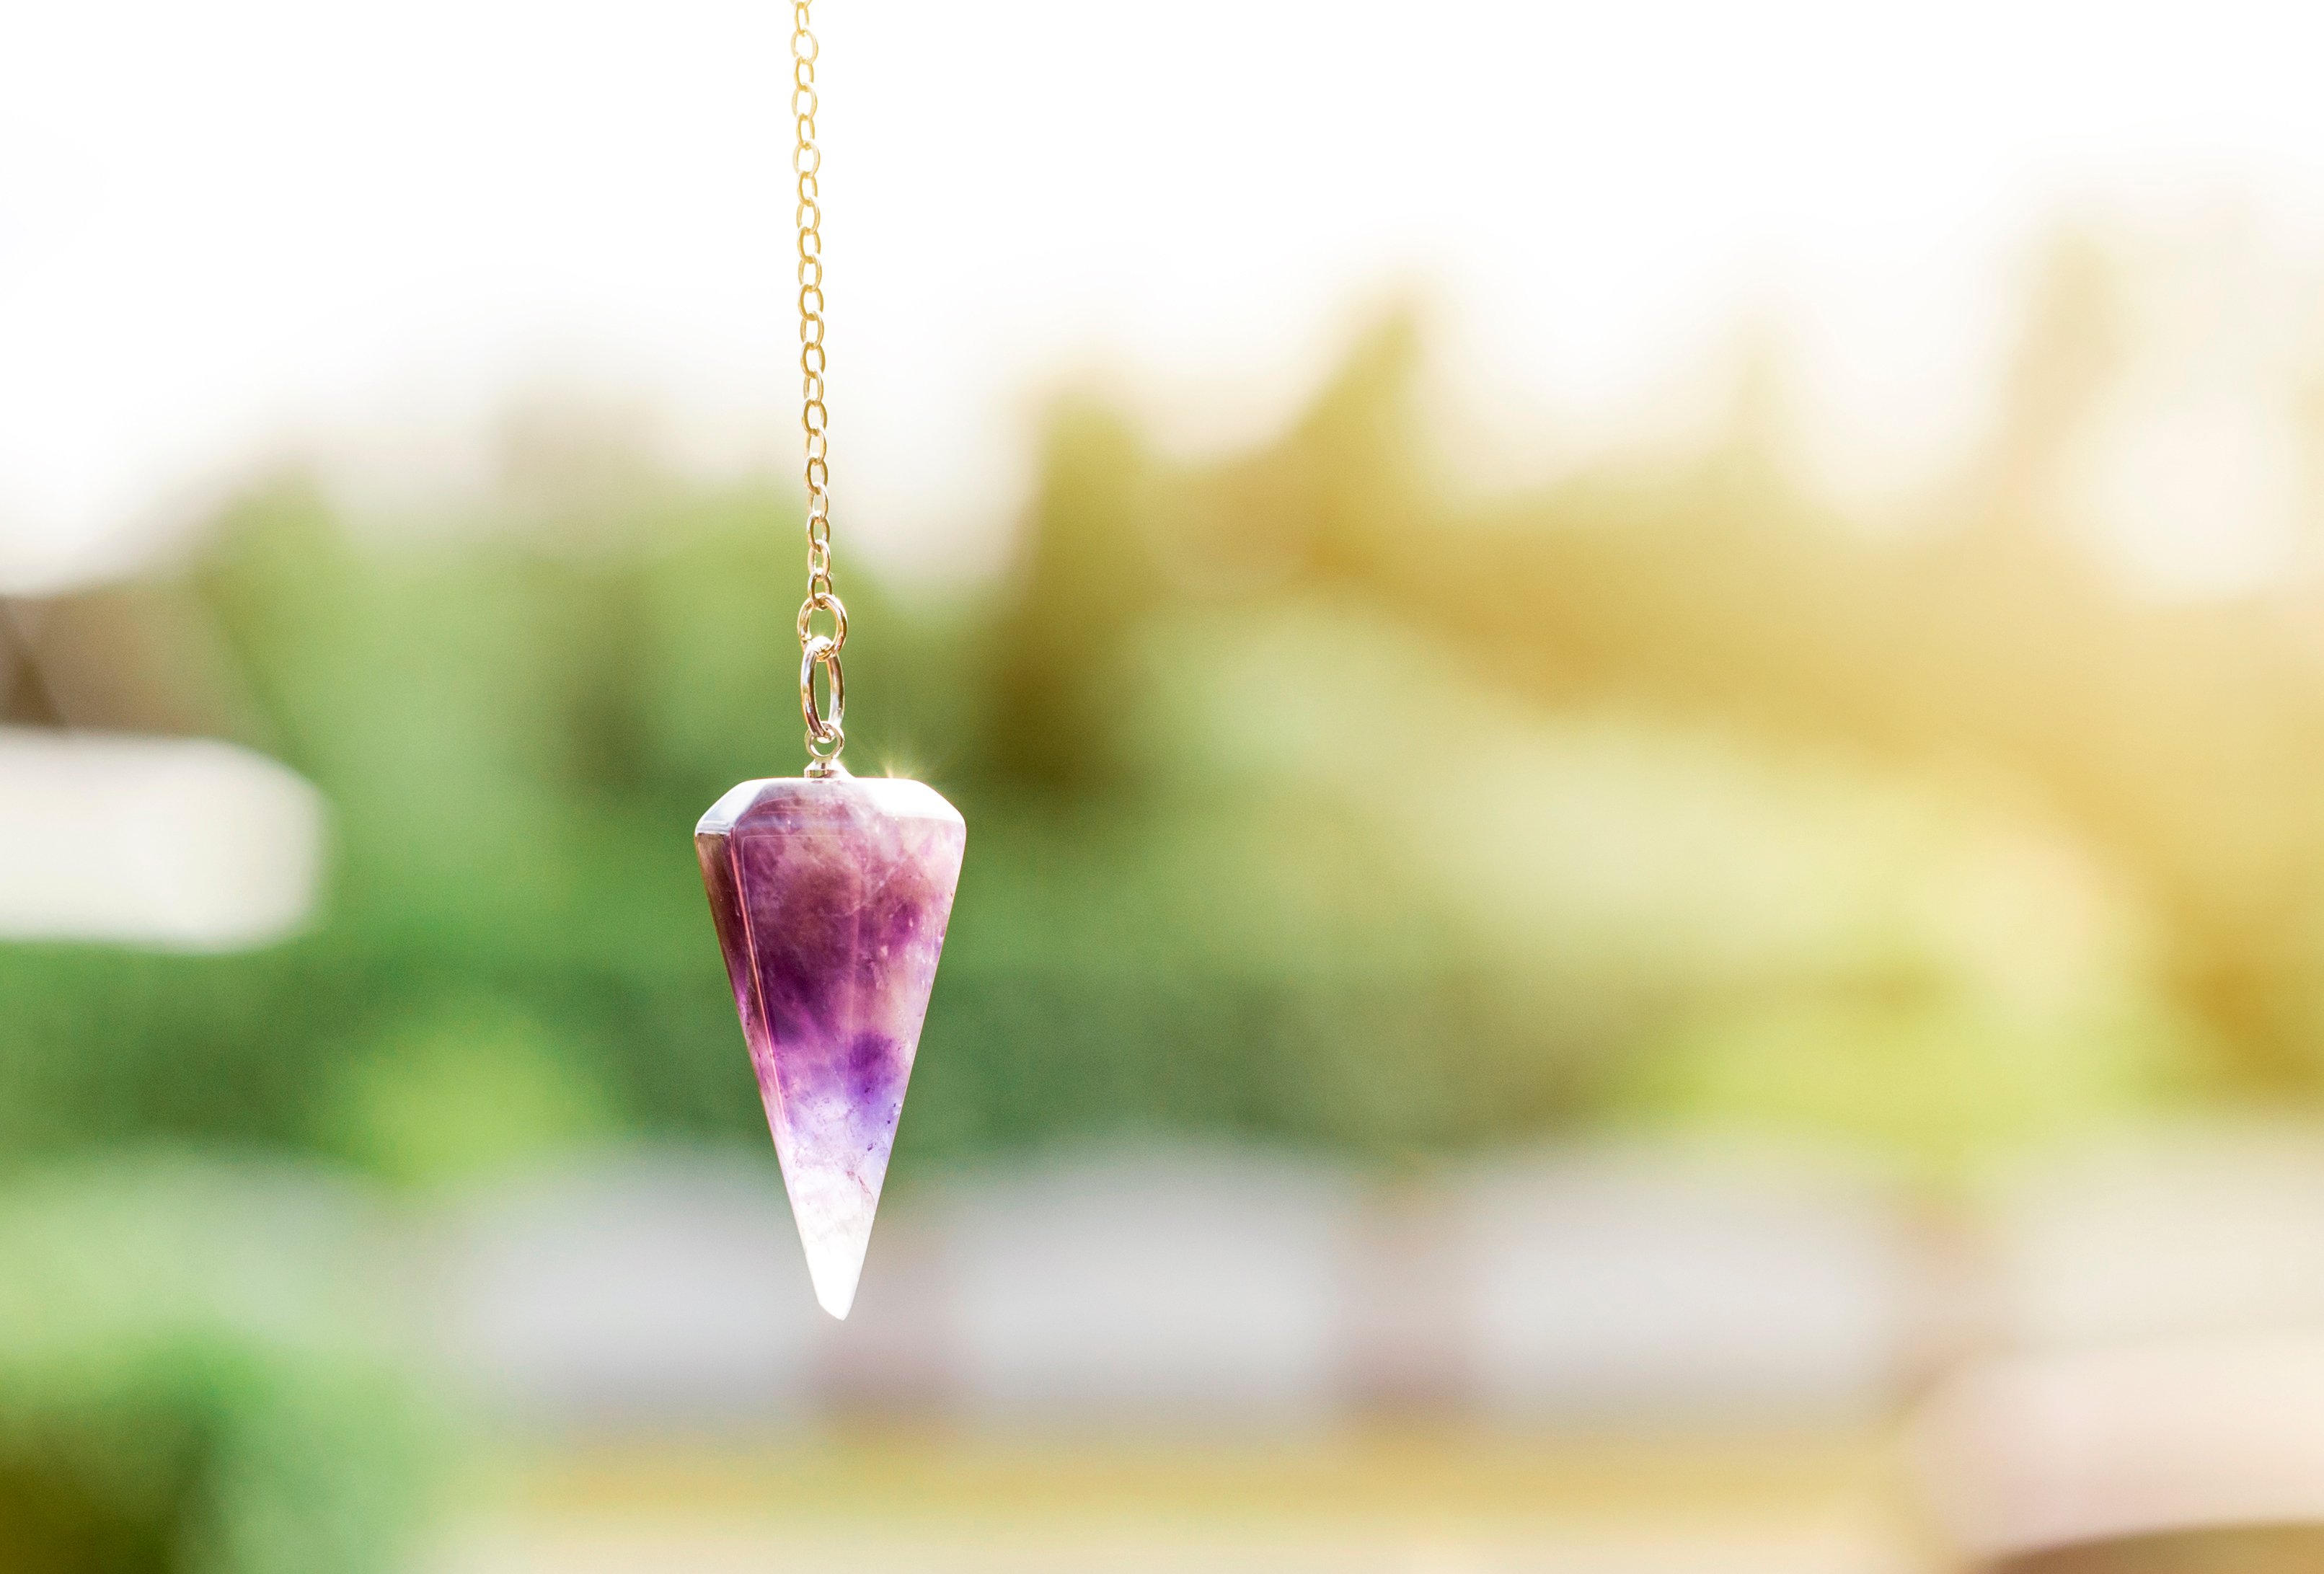 Amethyst pendulum | Shutterstock